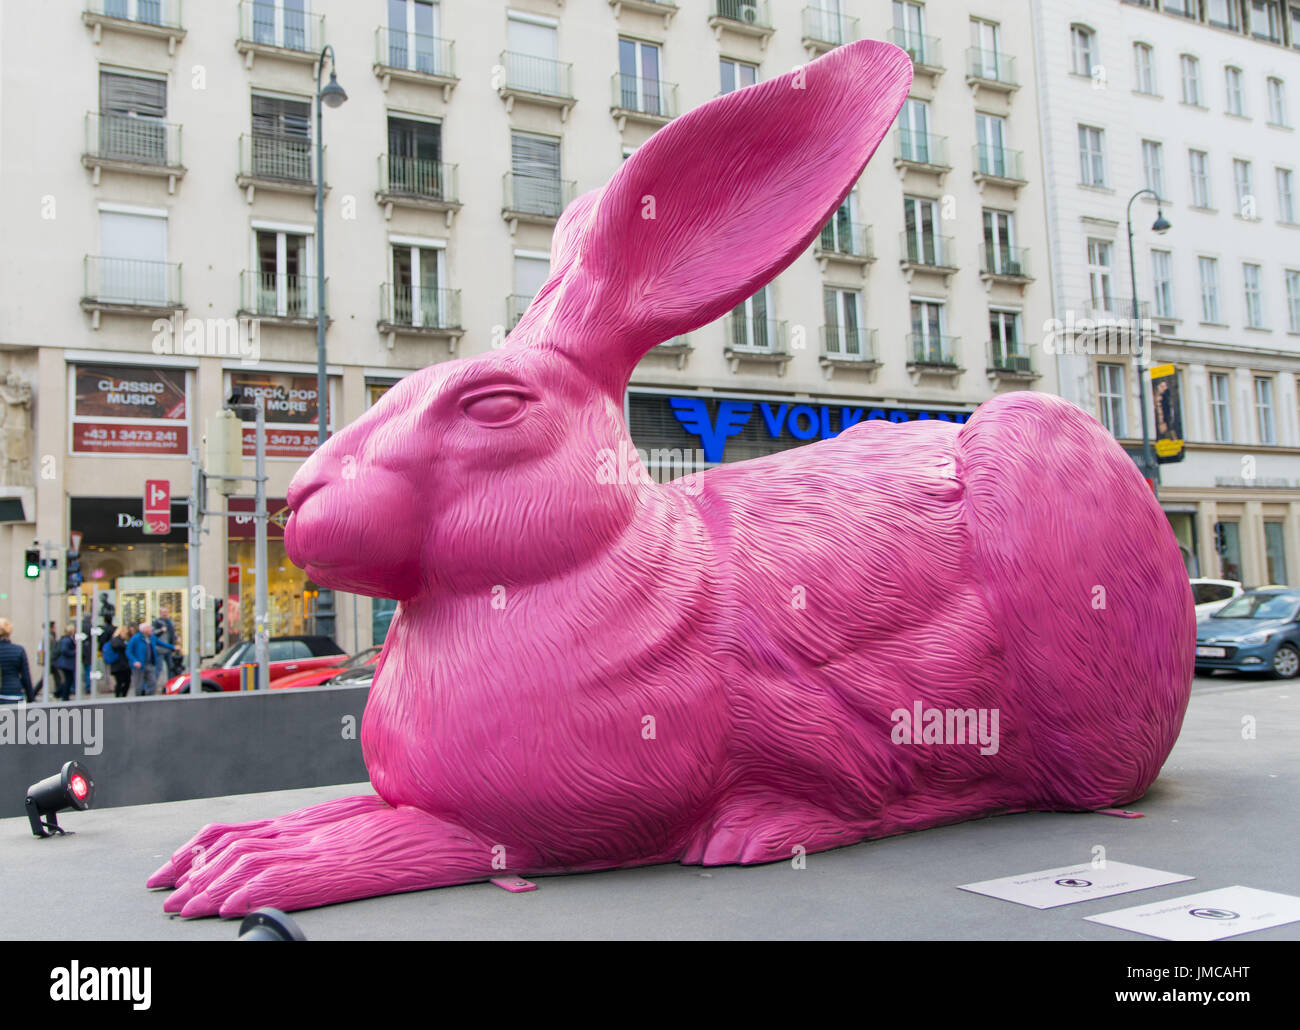 Giant Pink Rabbit - Vienna, Austria Stock Photo - Alamy